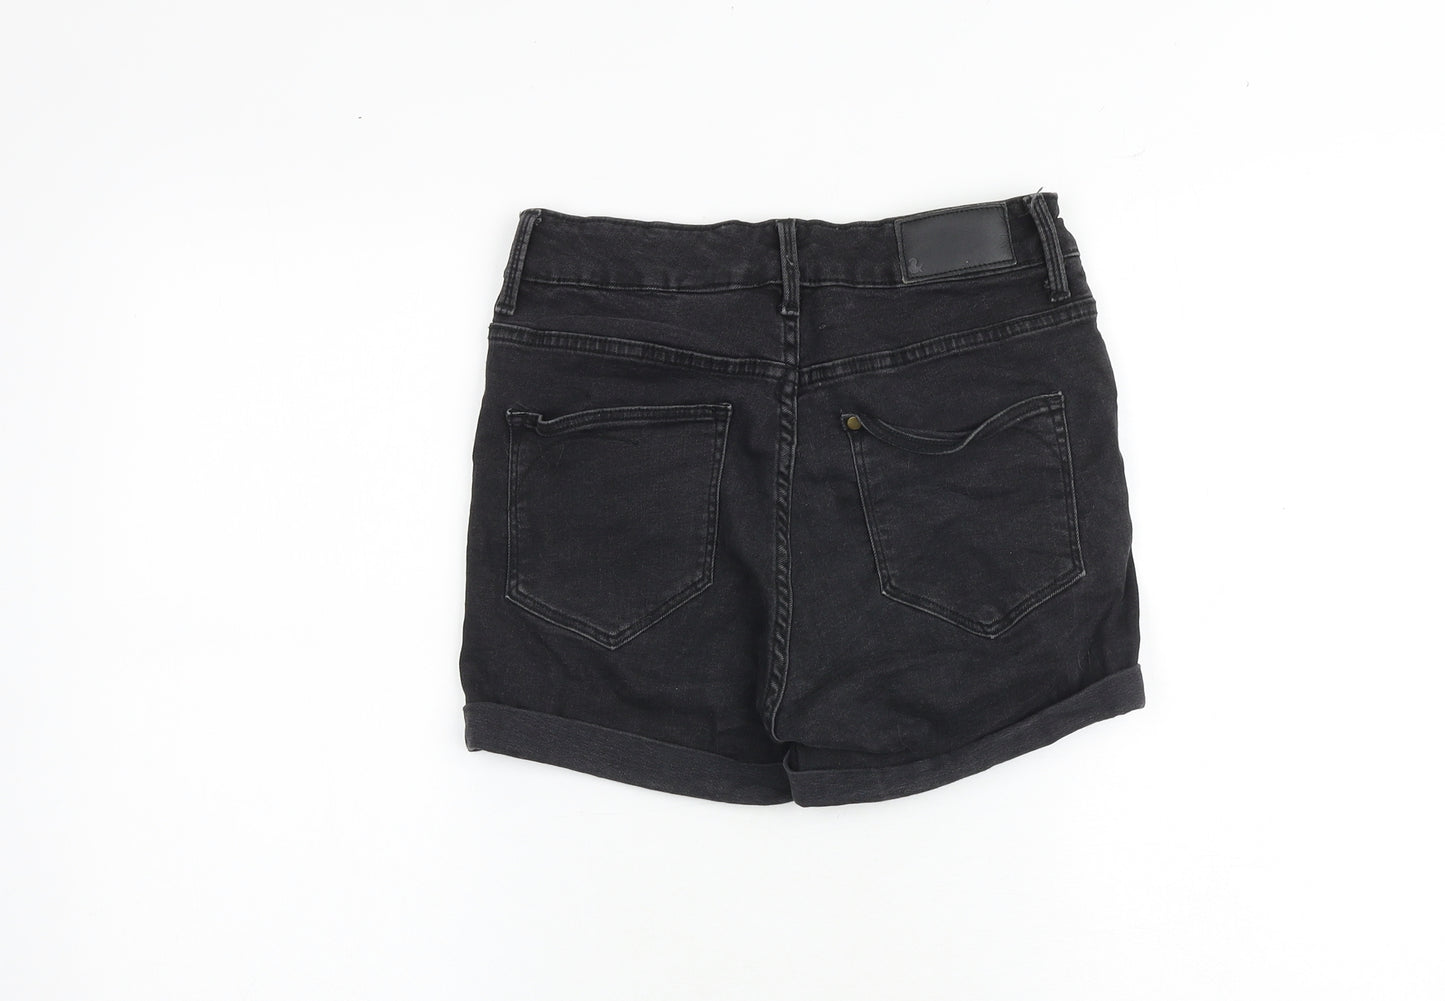 H&M Womens Black Cotton Chino Shorts Size 10 Regular Zip